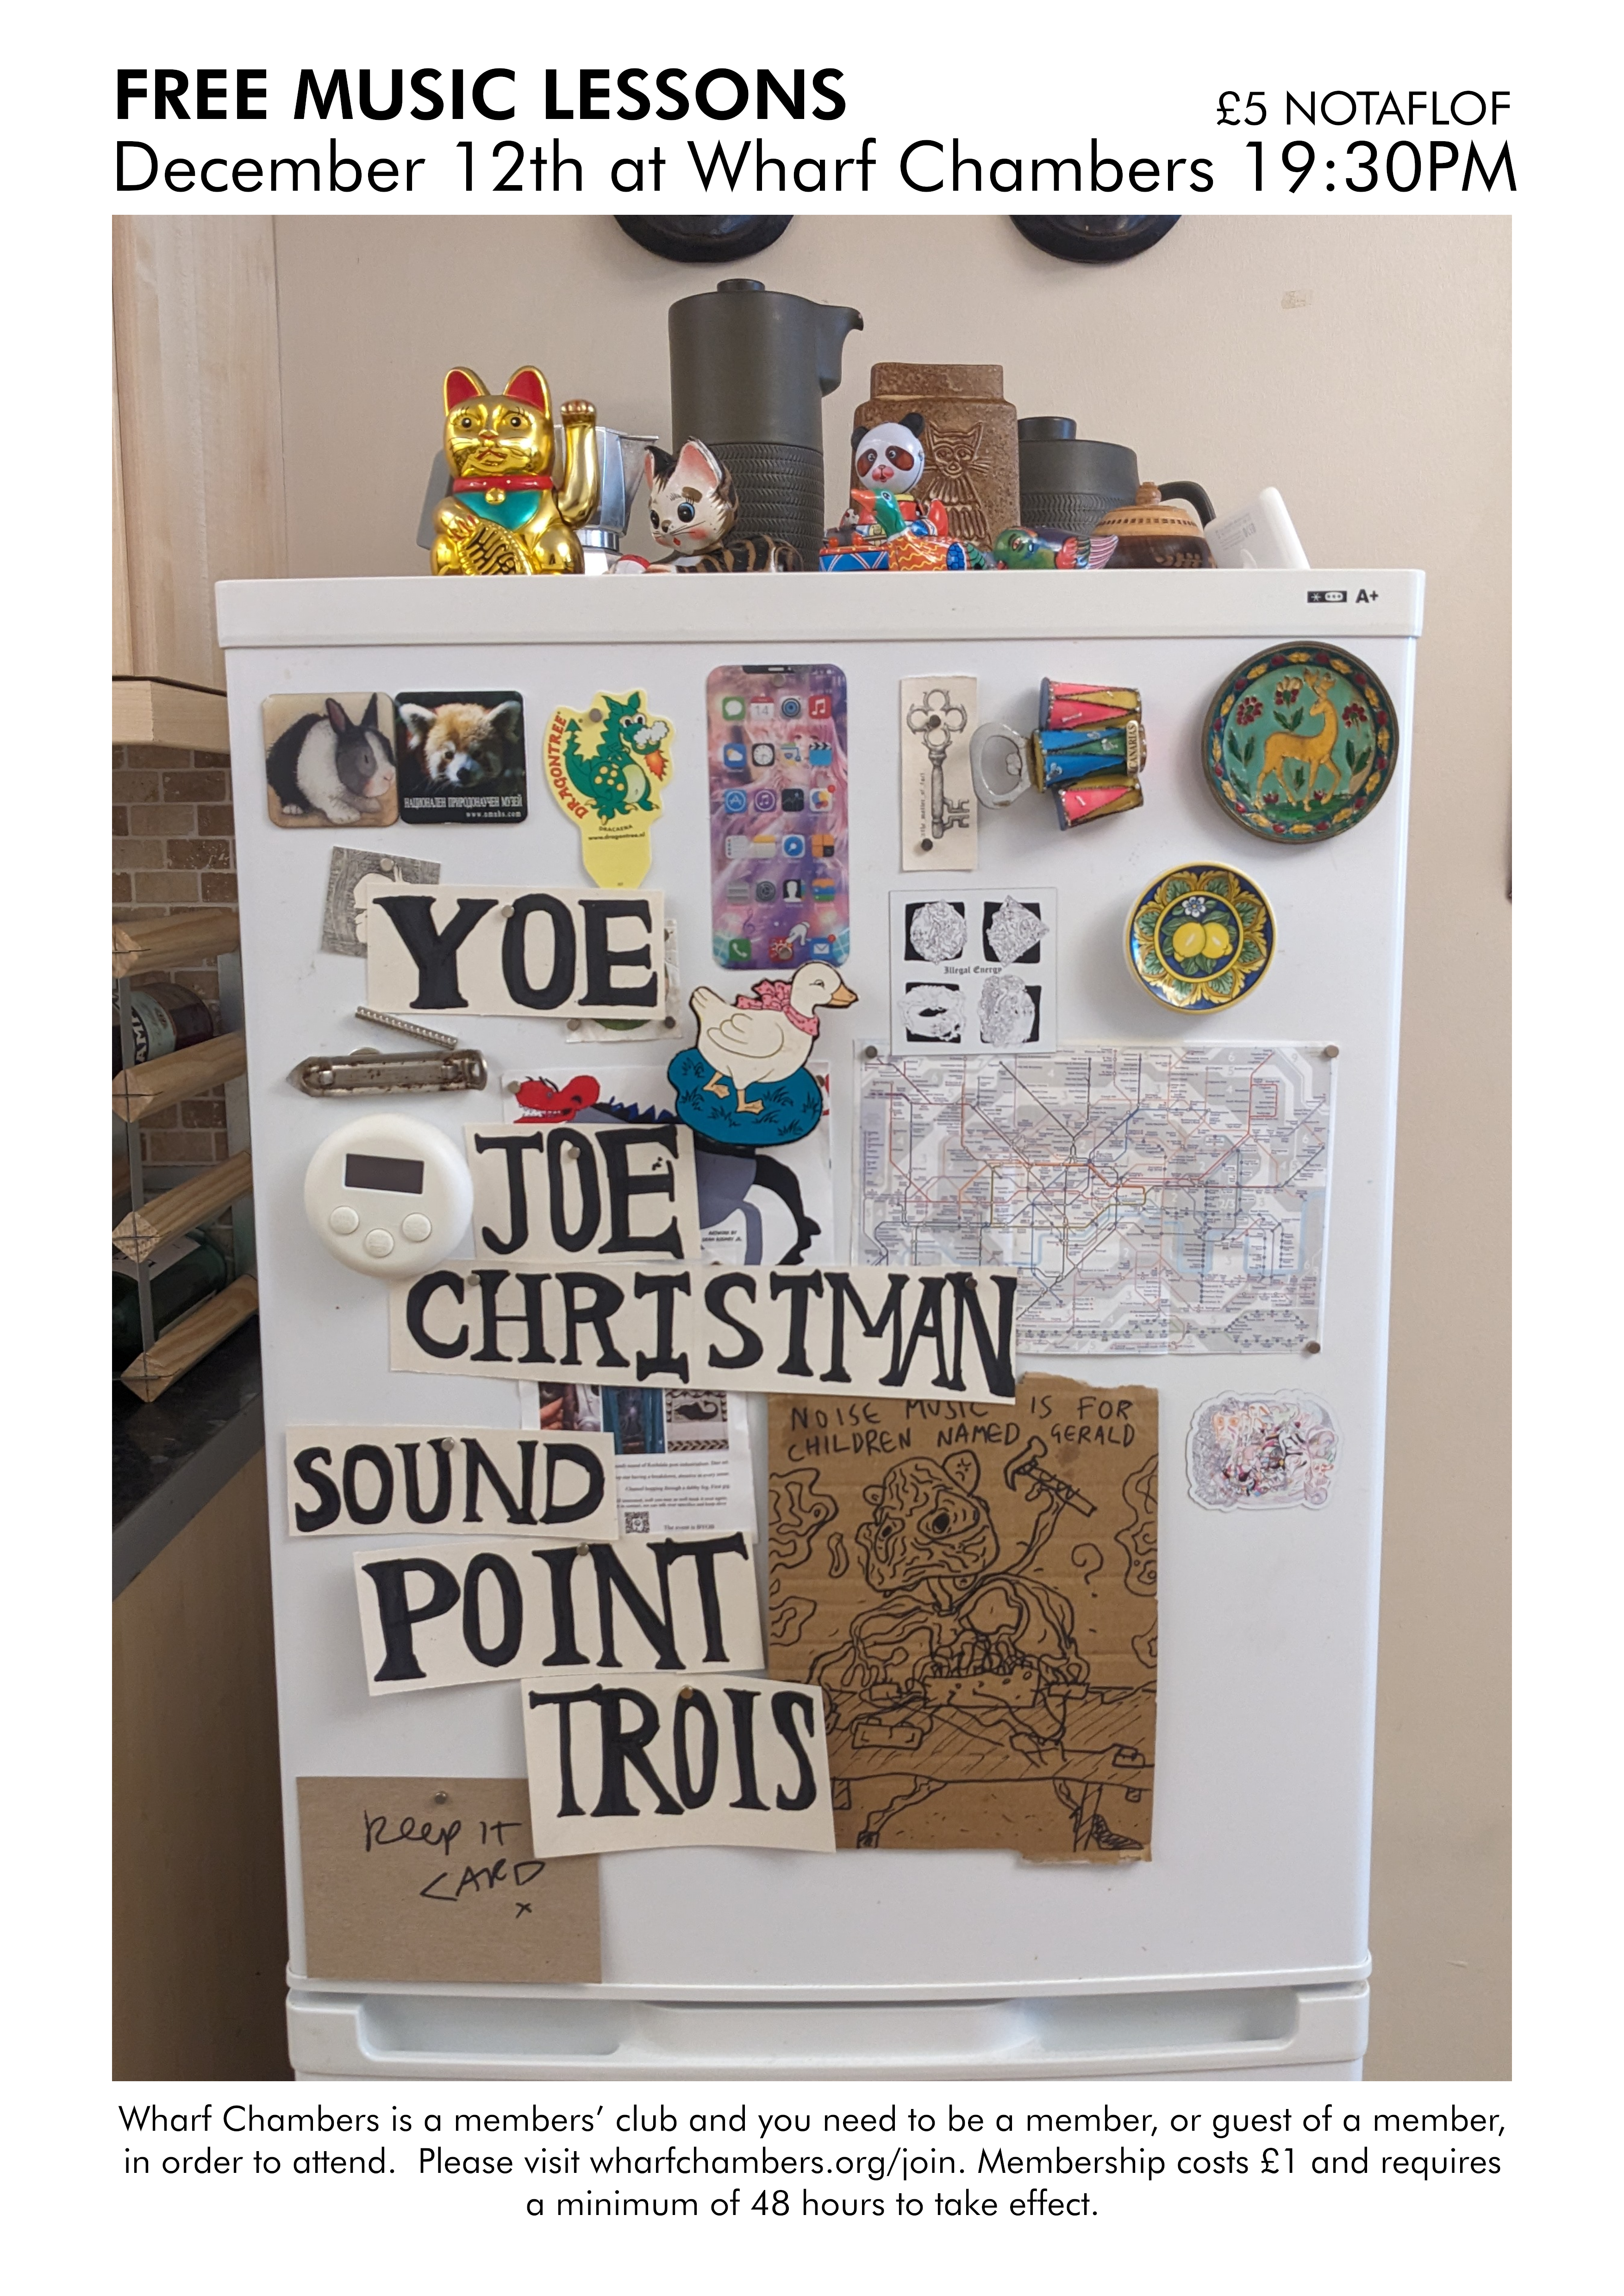 Event poster for YOE, Joe Christman, Sound Point Trois